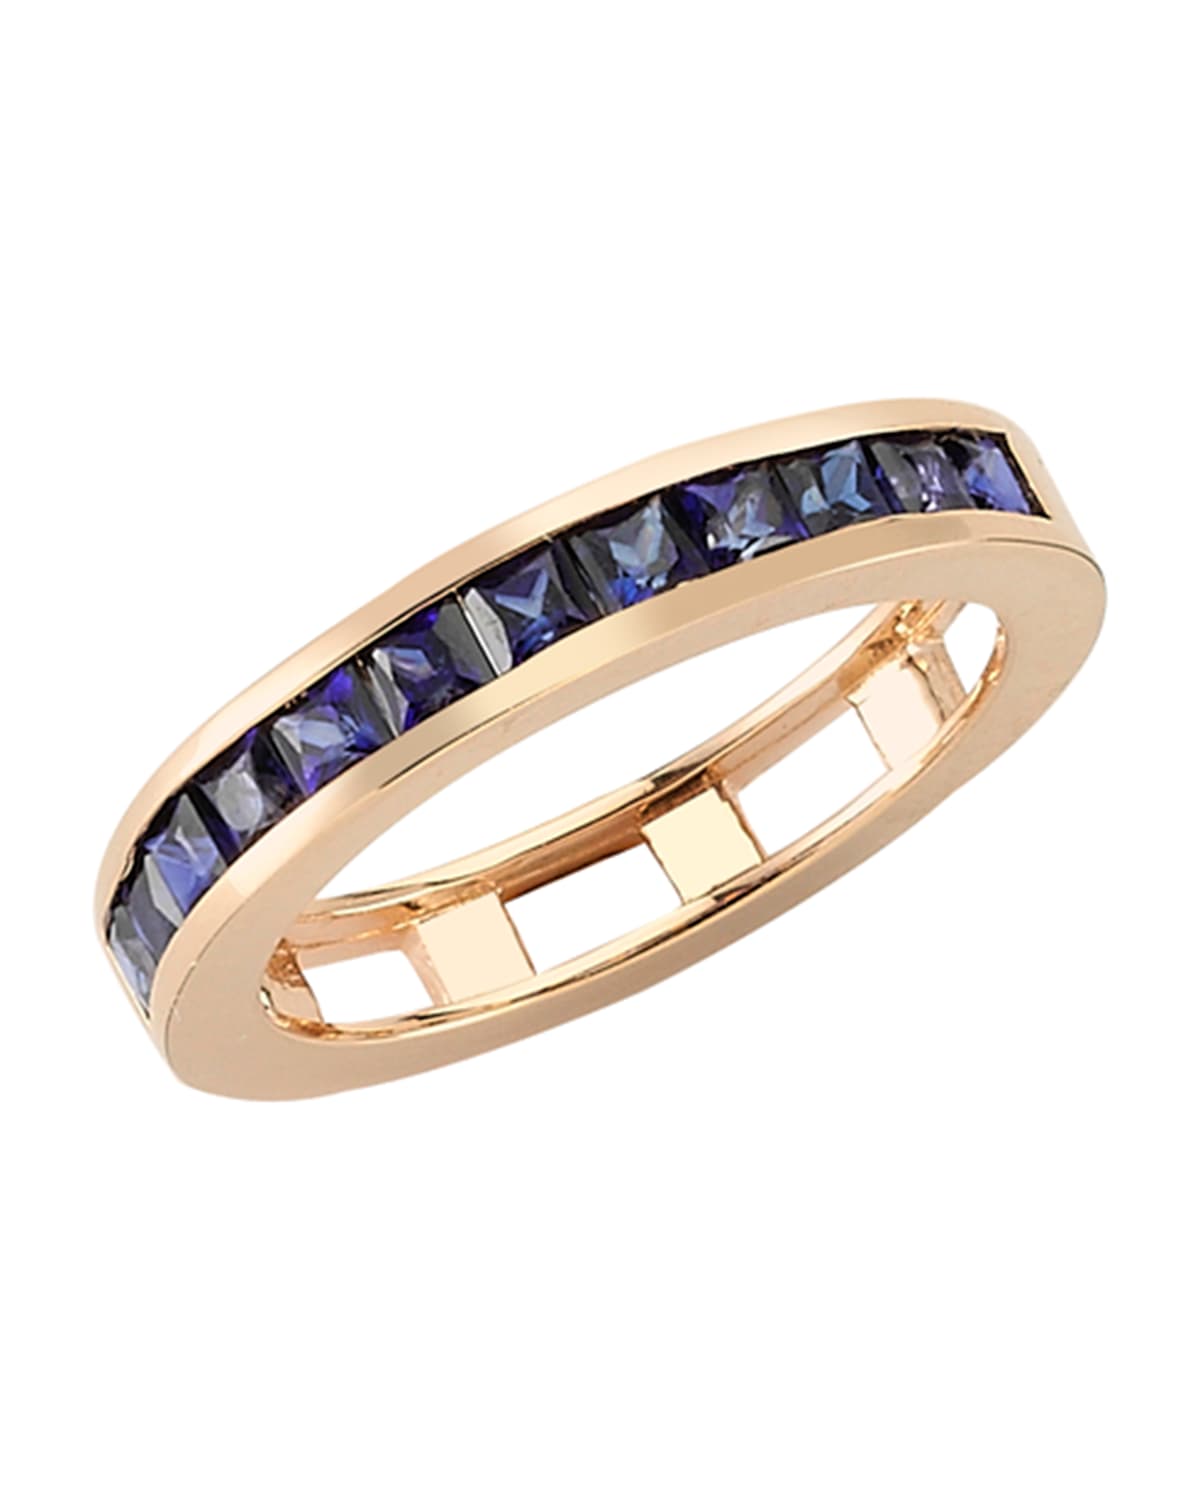 Mondrian Blue Sapphire Ring, Size 7